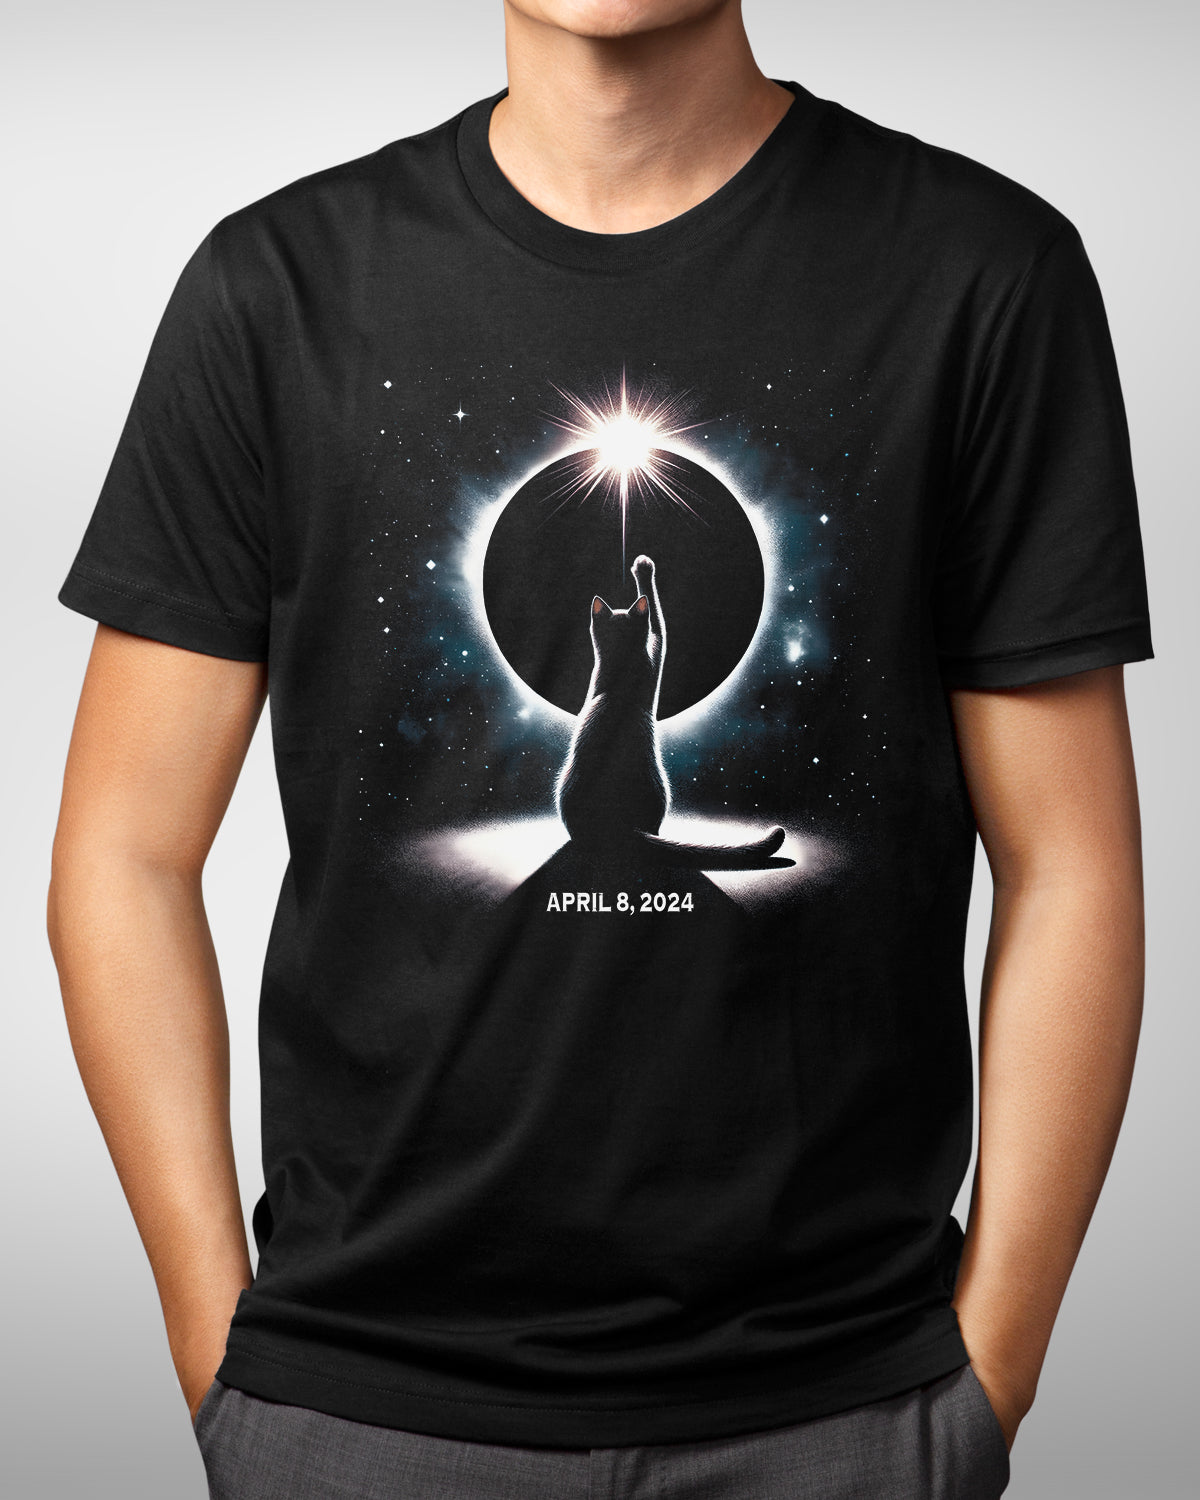 April 8 2024 Total Solar Eclipse Shirt, Cat Reaching For Light, Eclipse Watching Tee - Feline Lover Astronomy Souvenir